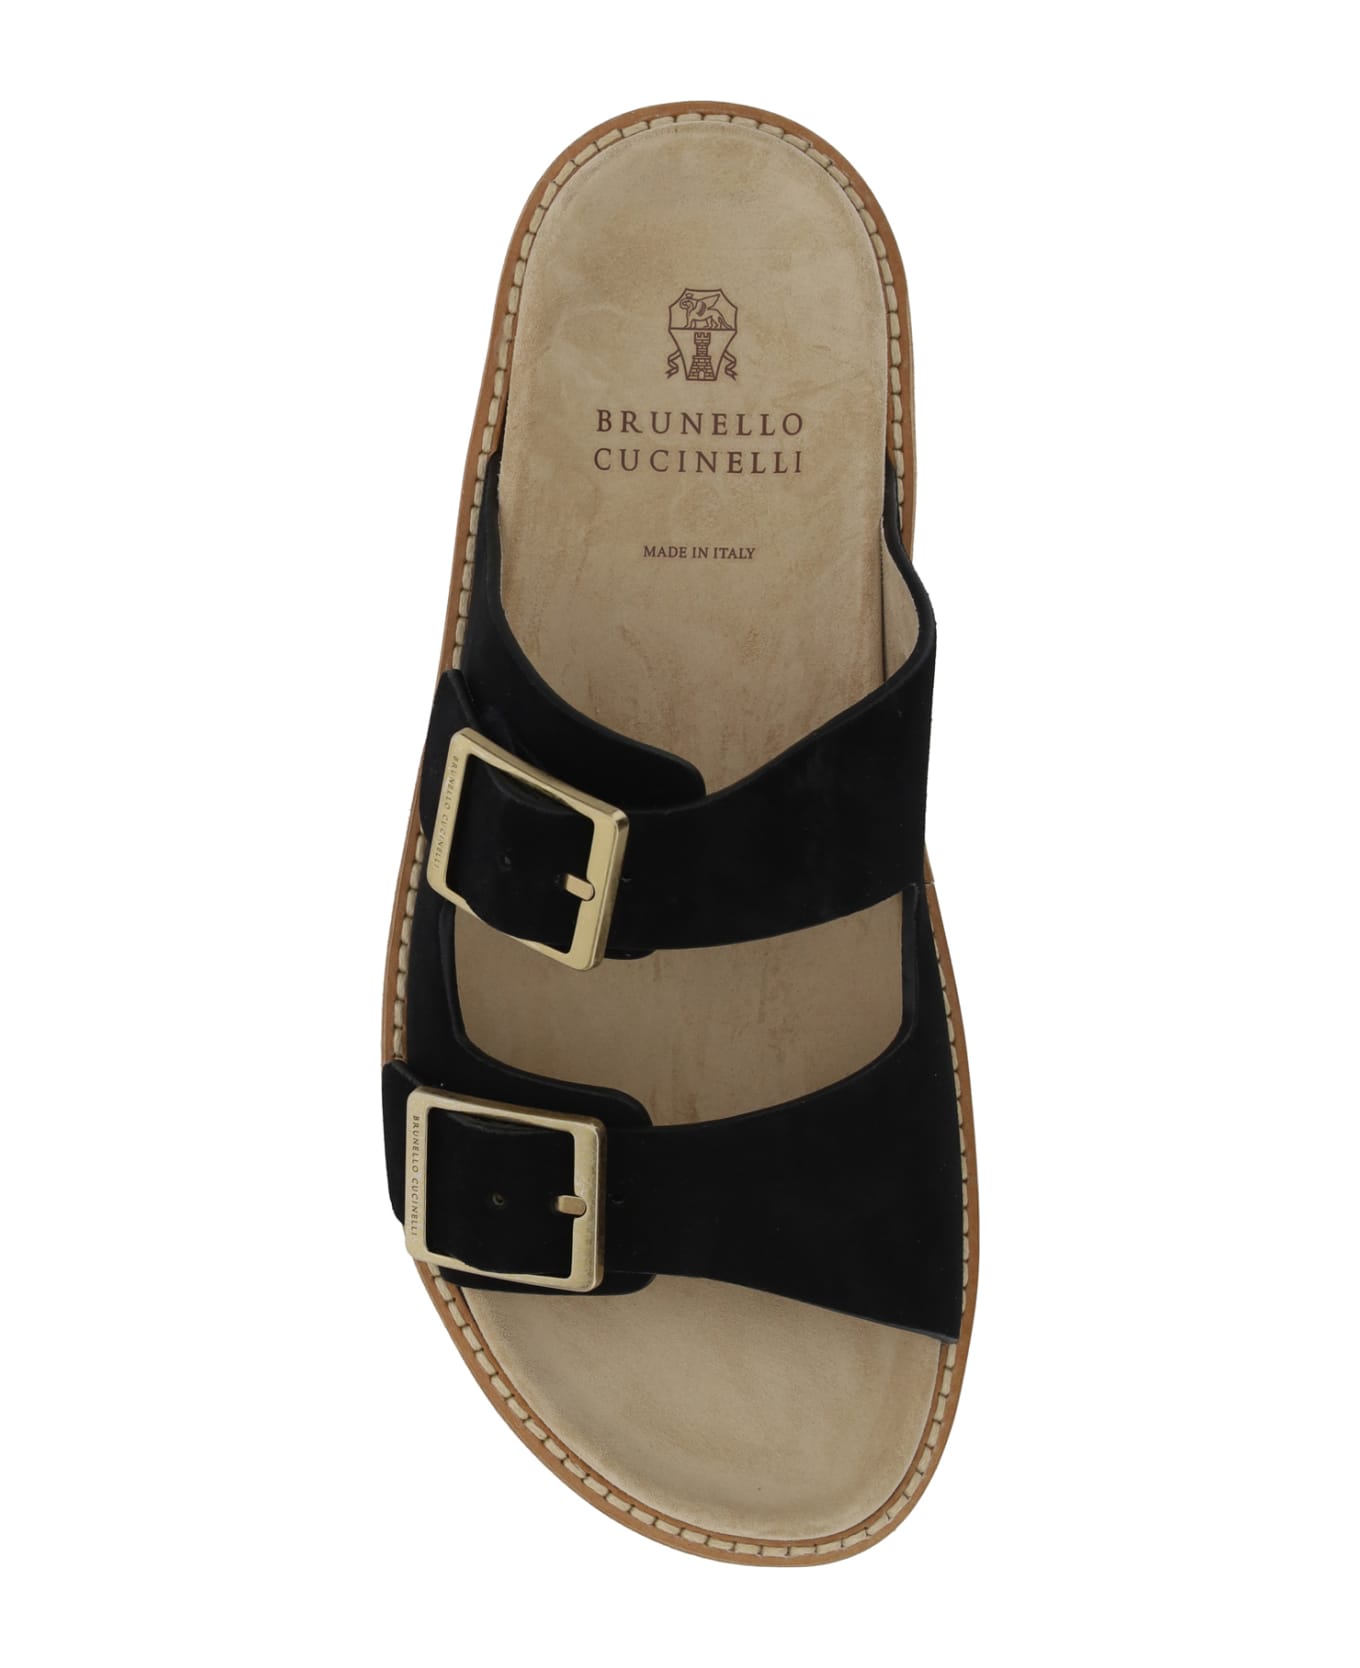 Brunello Cucinelli Sandals - Nero+camel